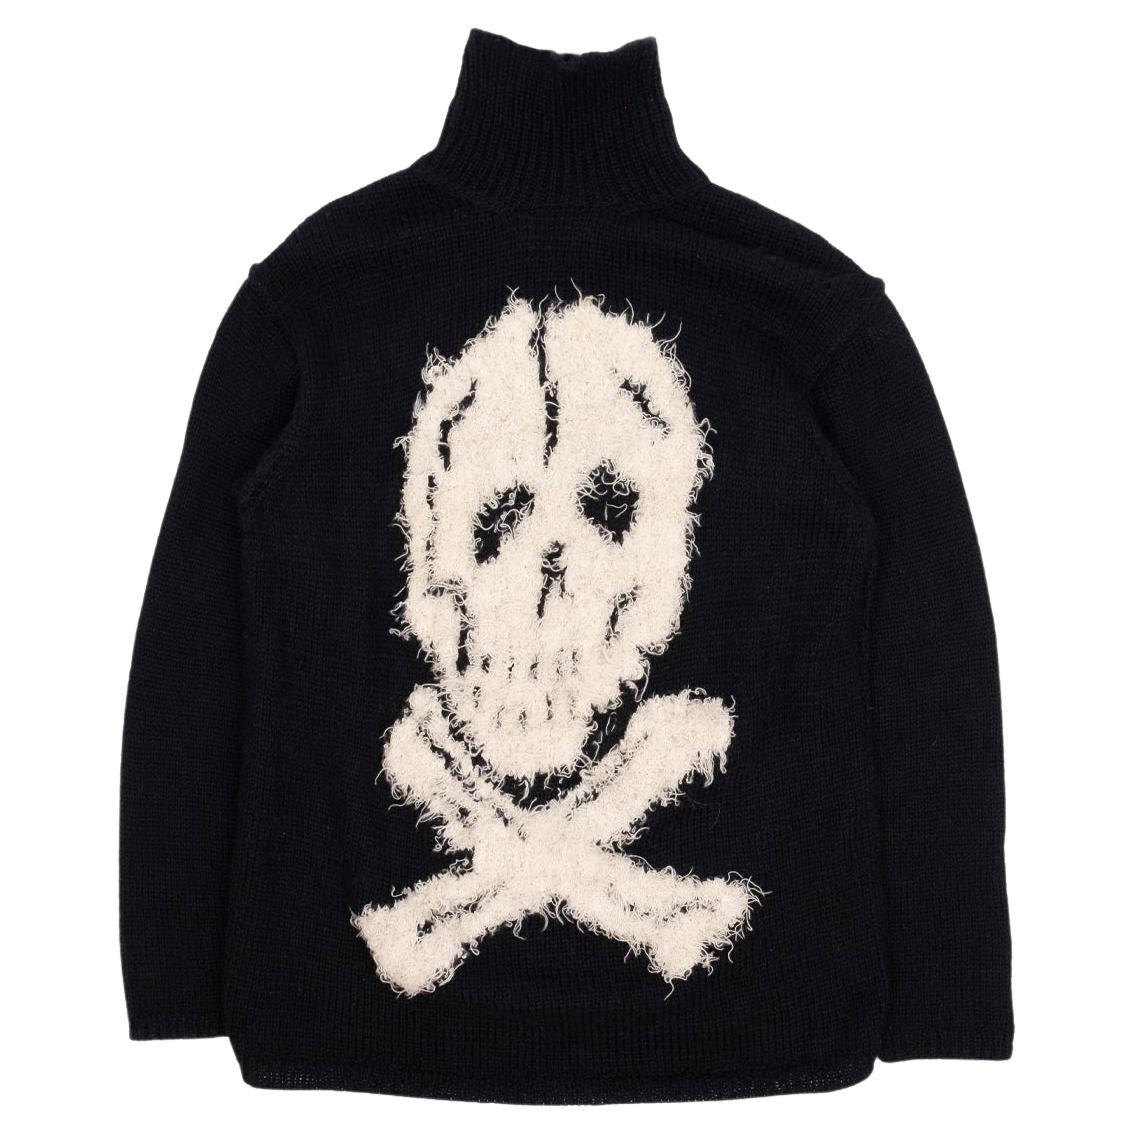 Yohji Yamamoto Pour Homme AW1994 Skull Sweater